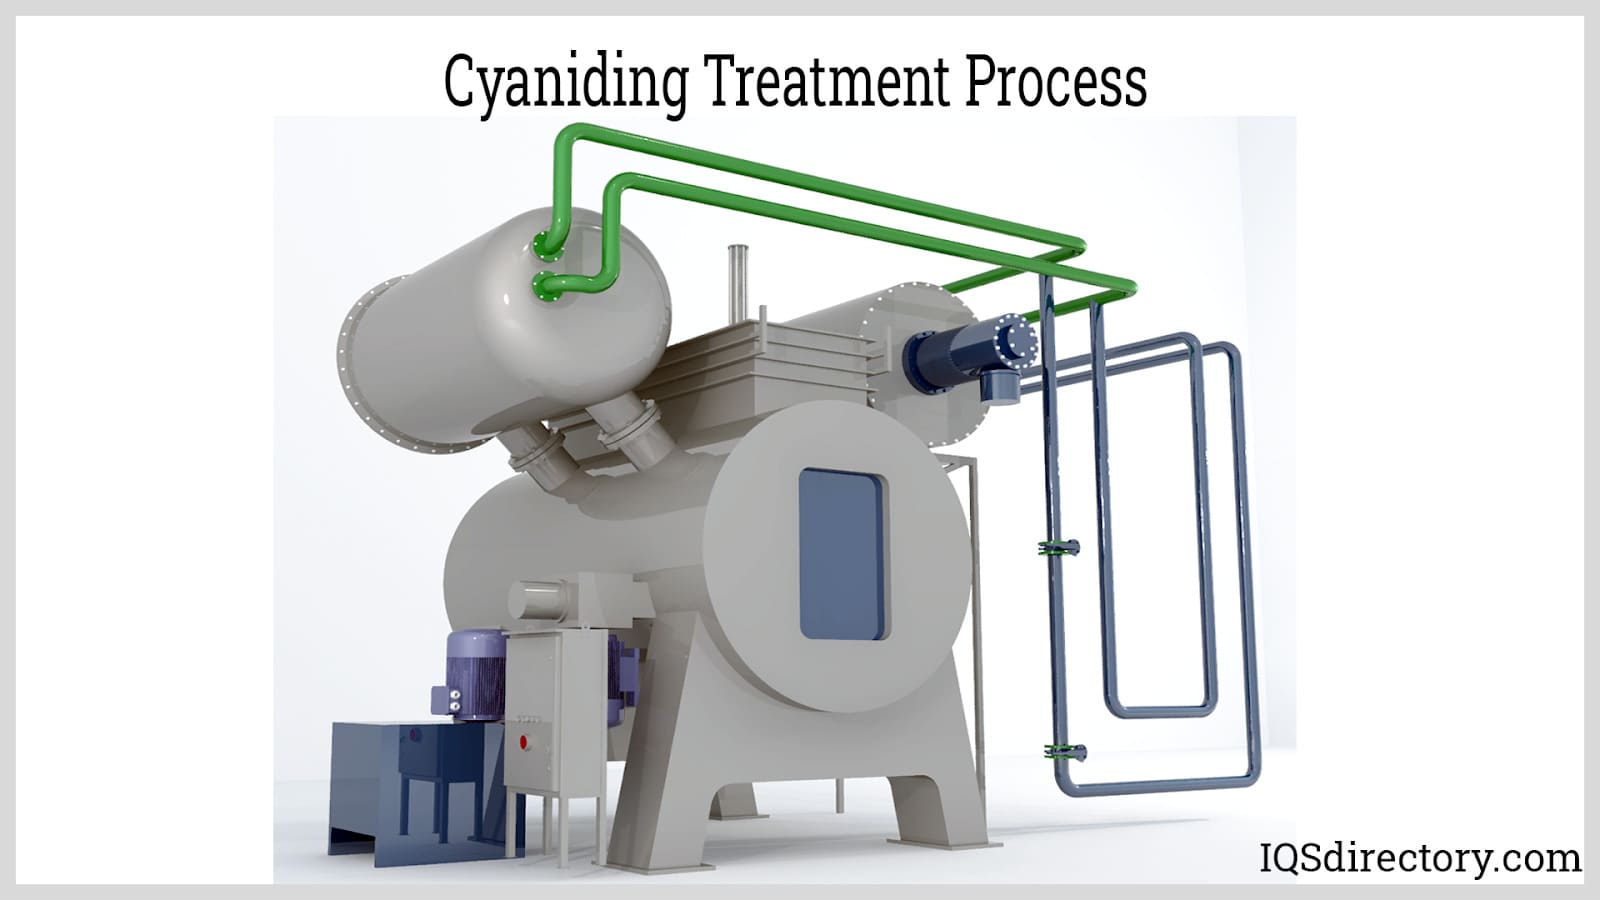 Cyaniding Treatment Process